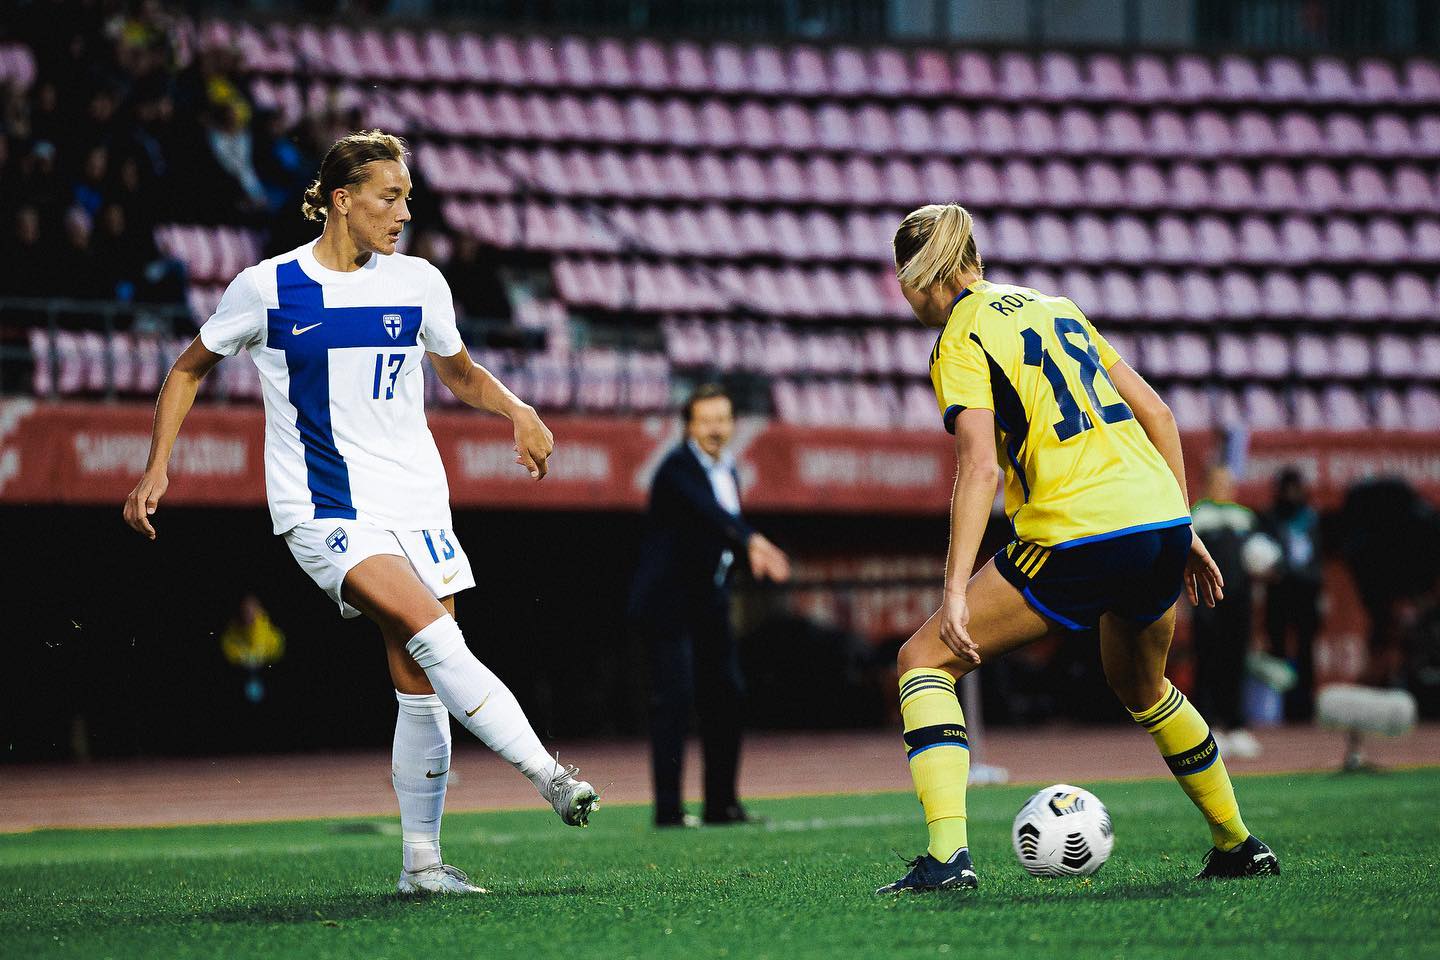 Jenny-Julia Danielsson playing for Finland. 